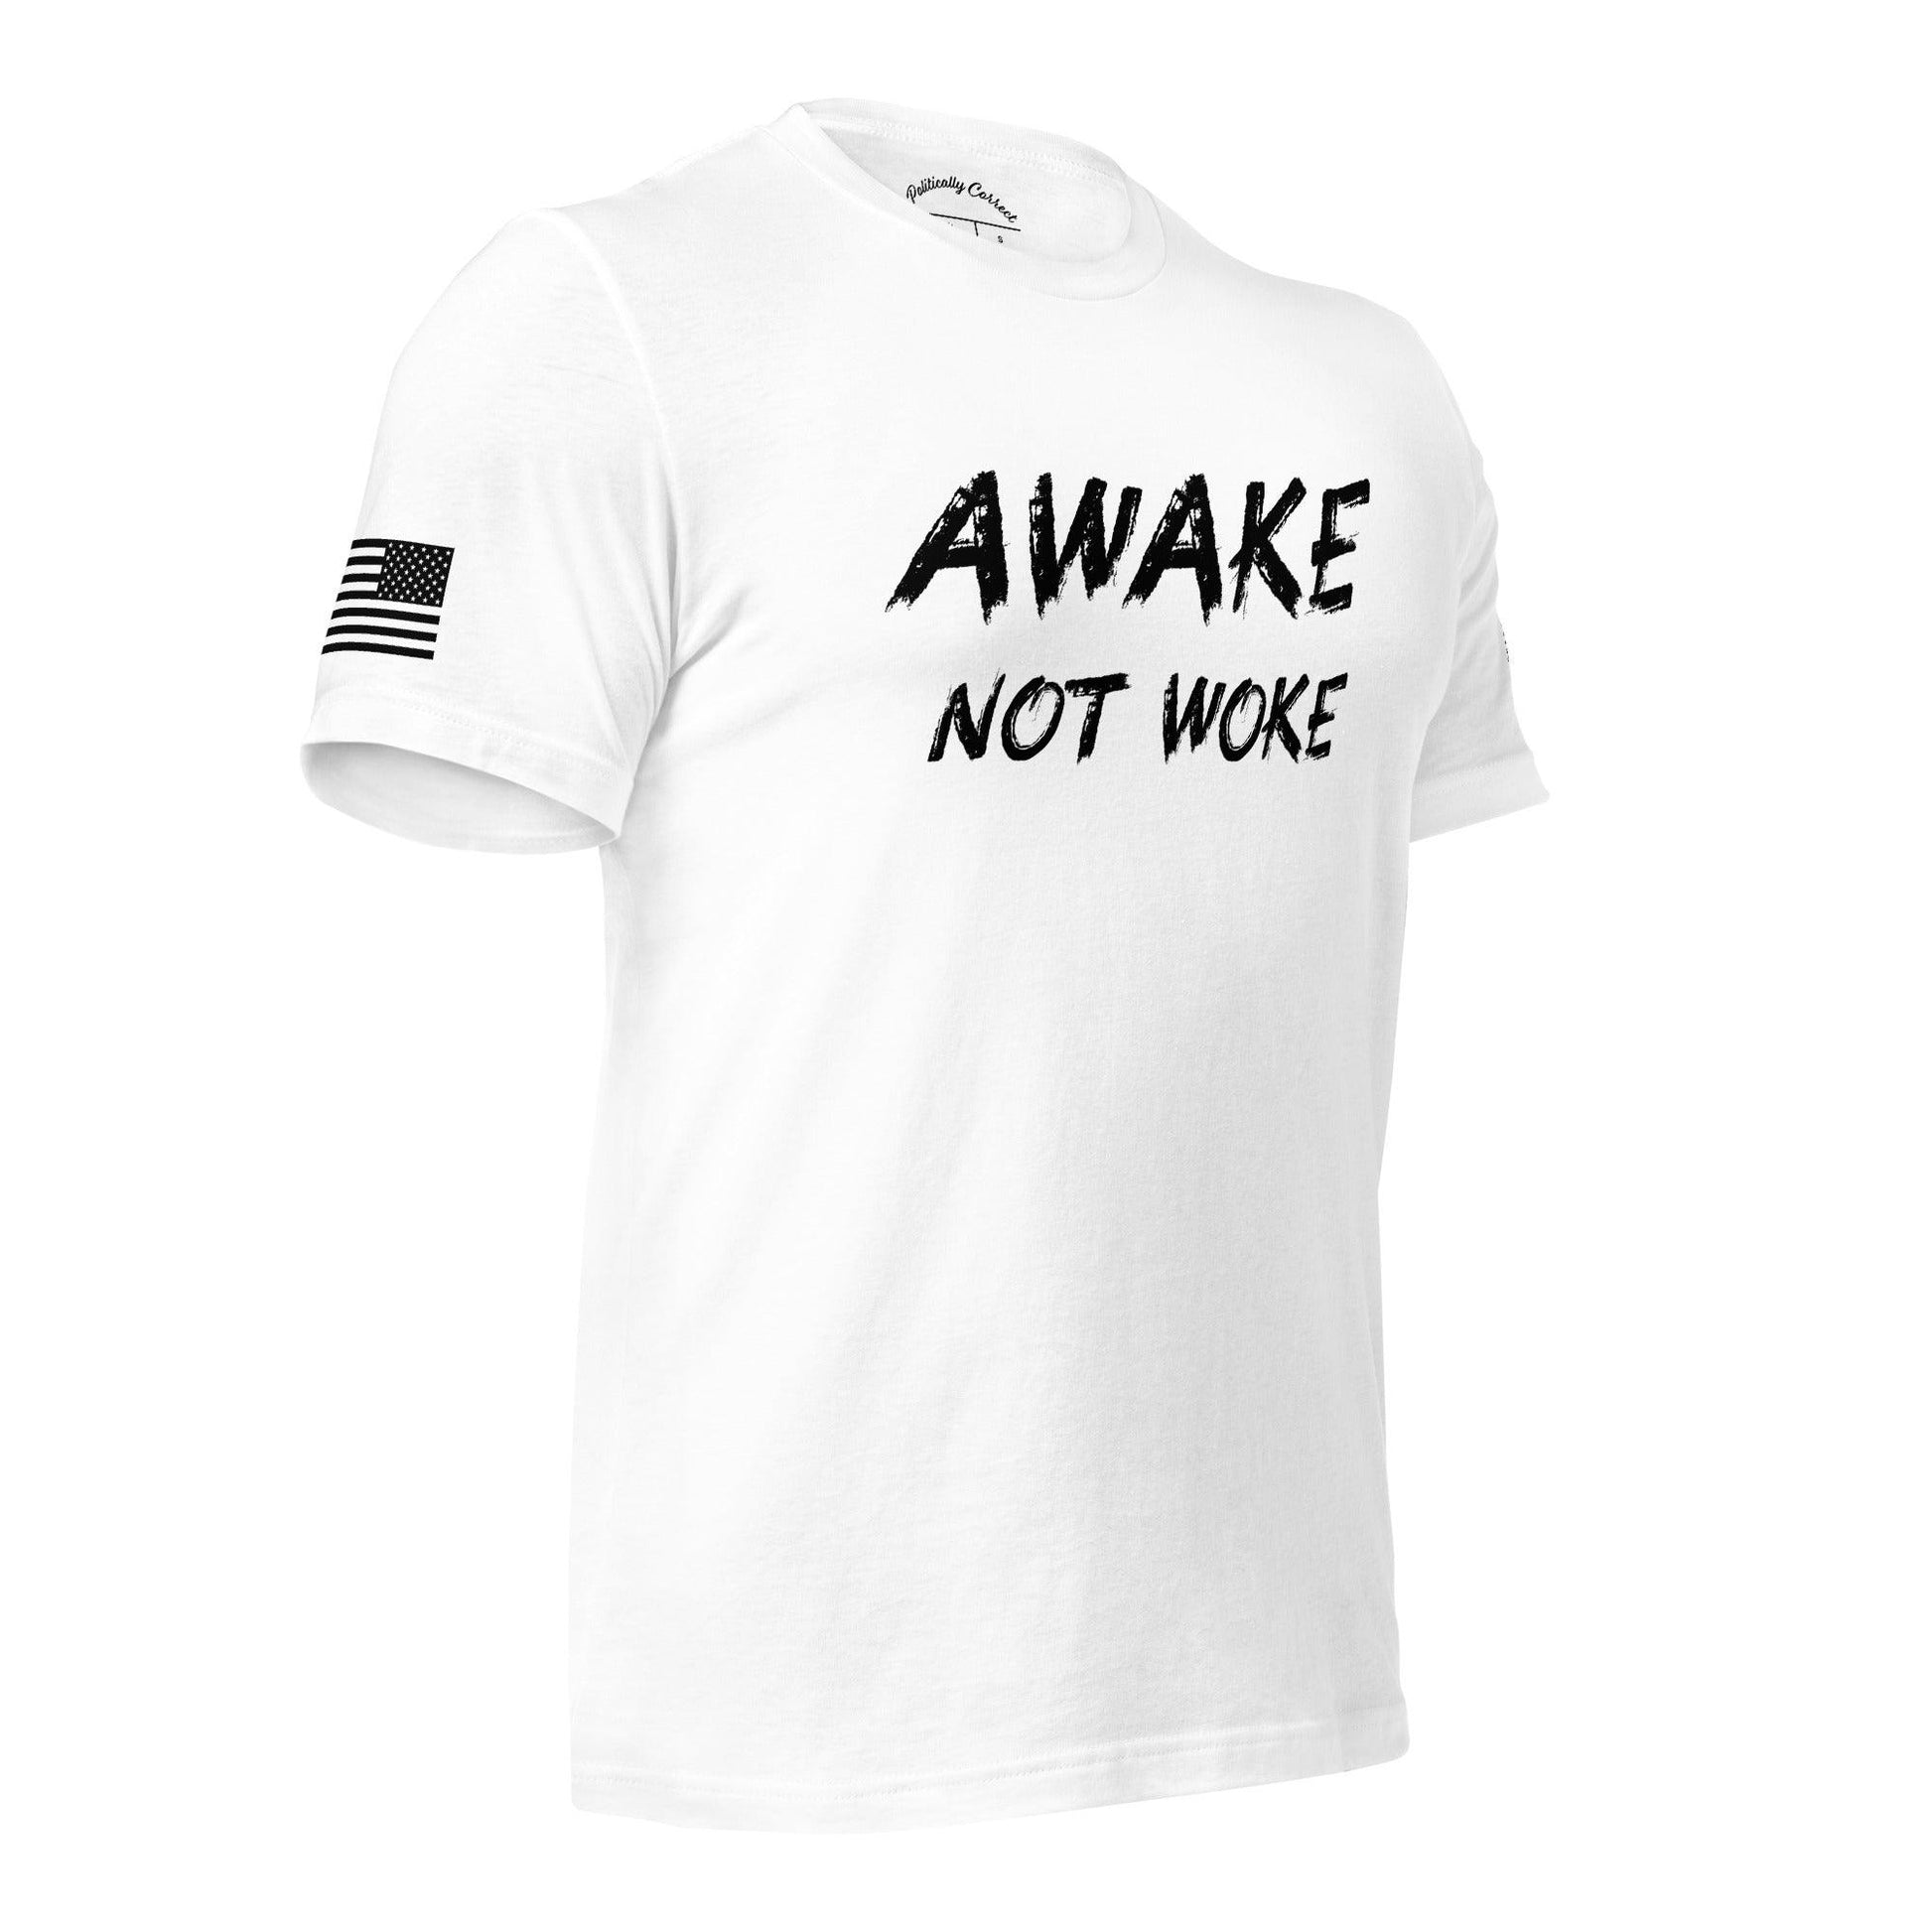 Awake not woke - Bright - Politically Correct